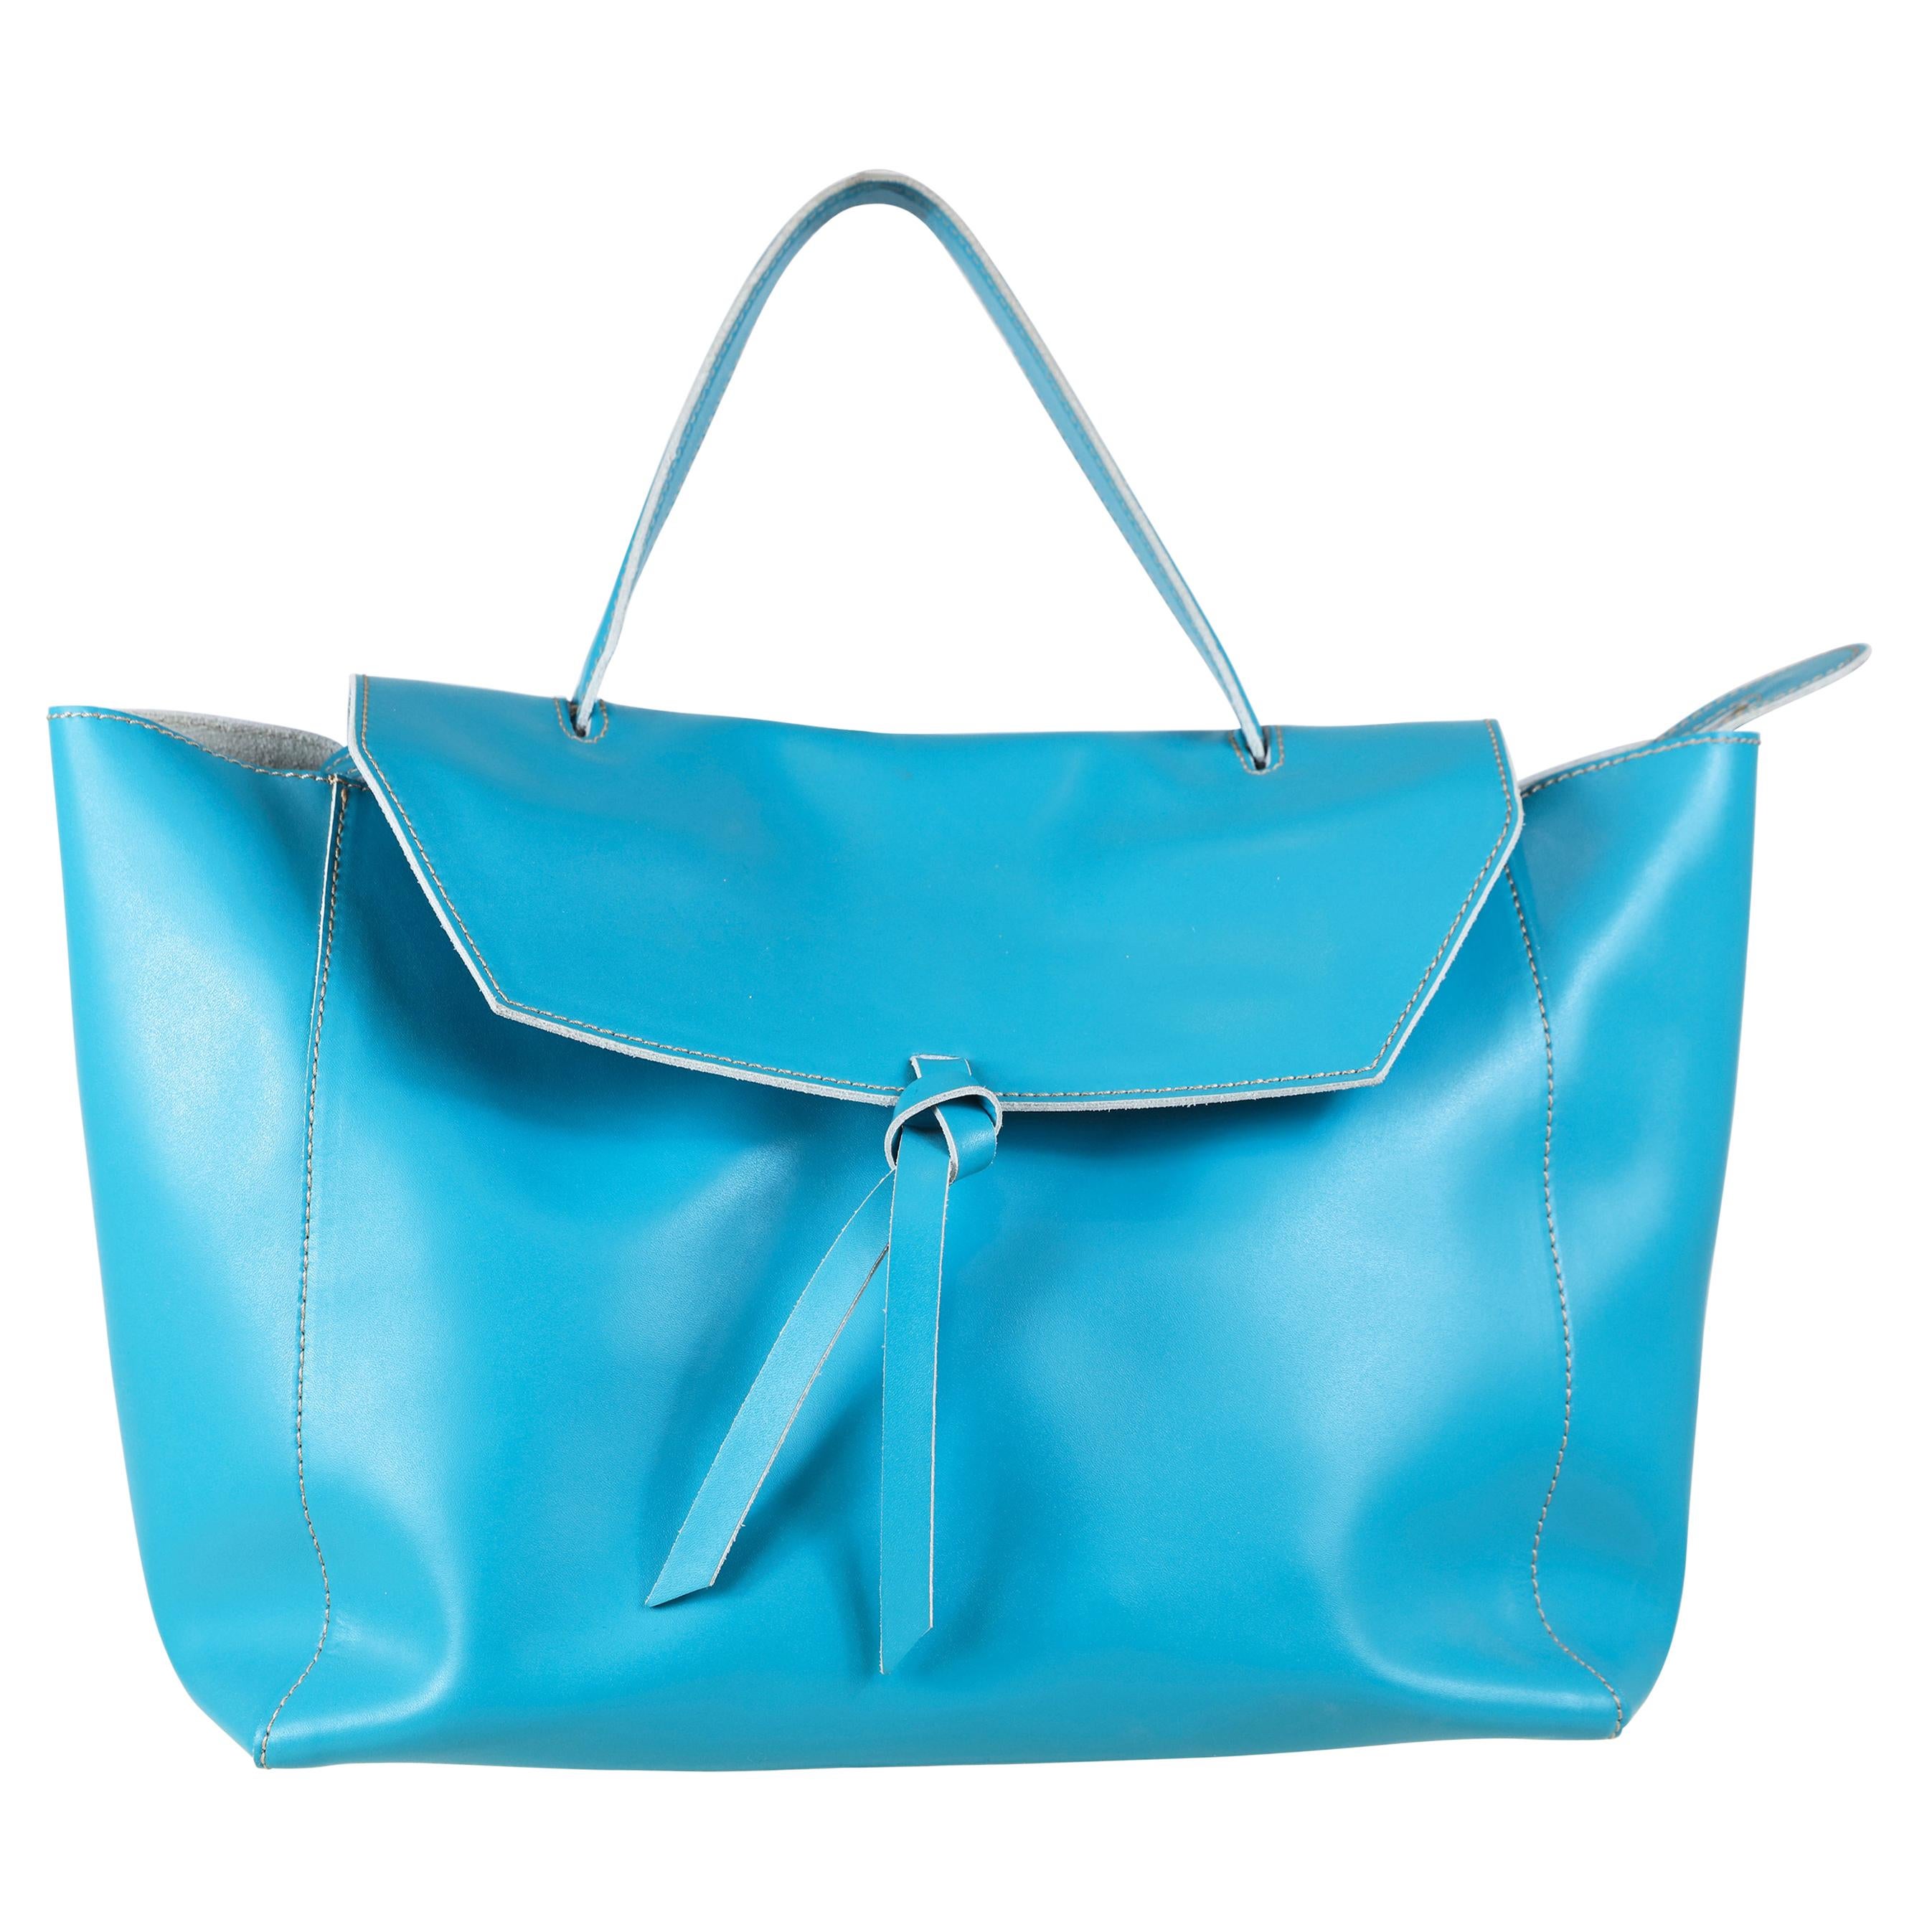 Alexandra DeCurtis Turquoise/Aqua, Leather, Calf Skin Satchel Bag